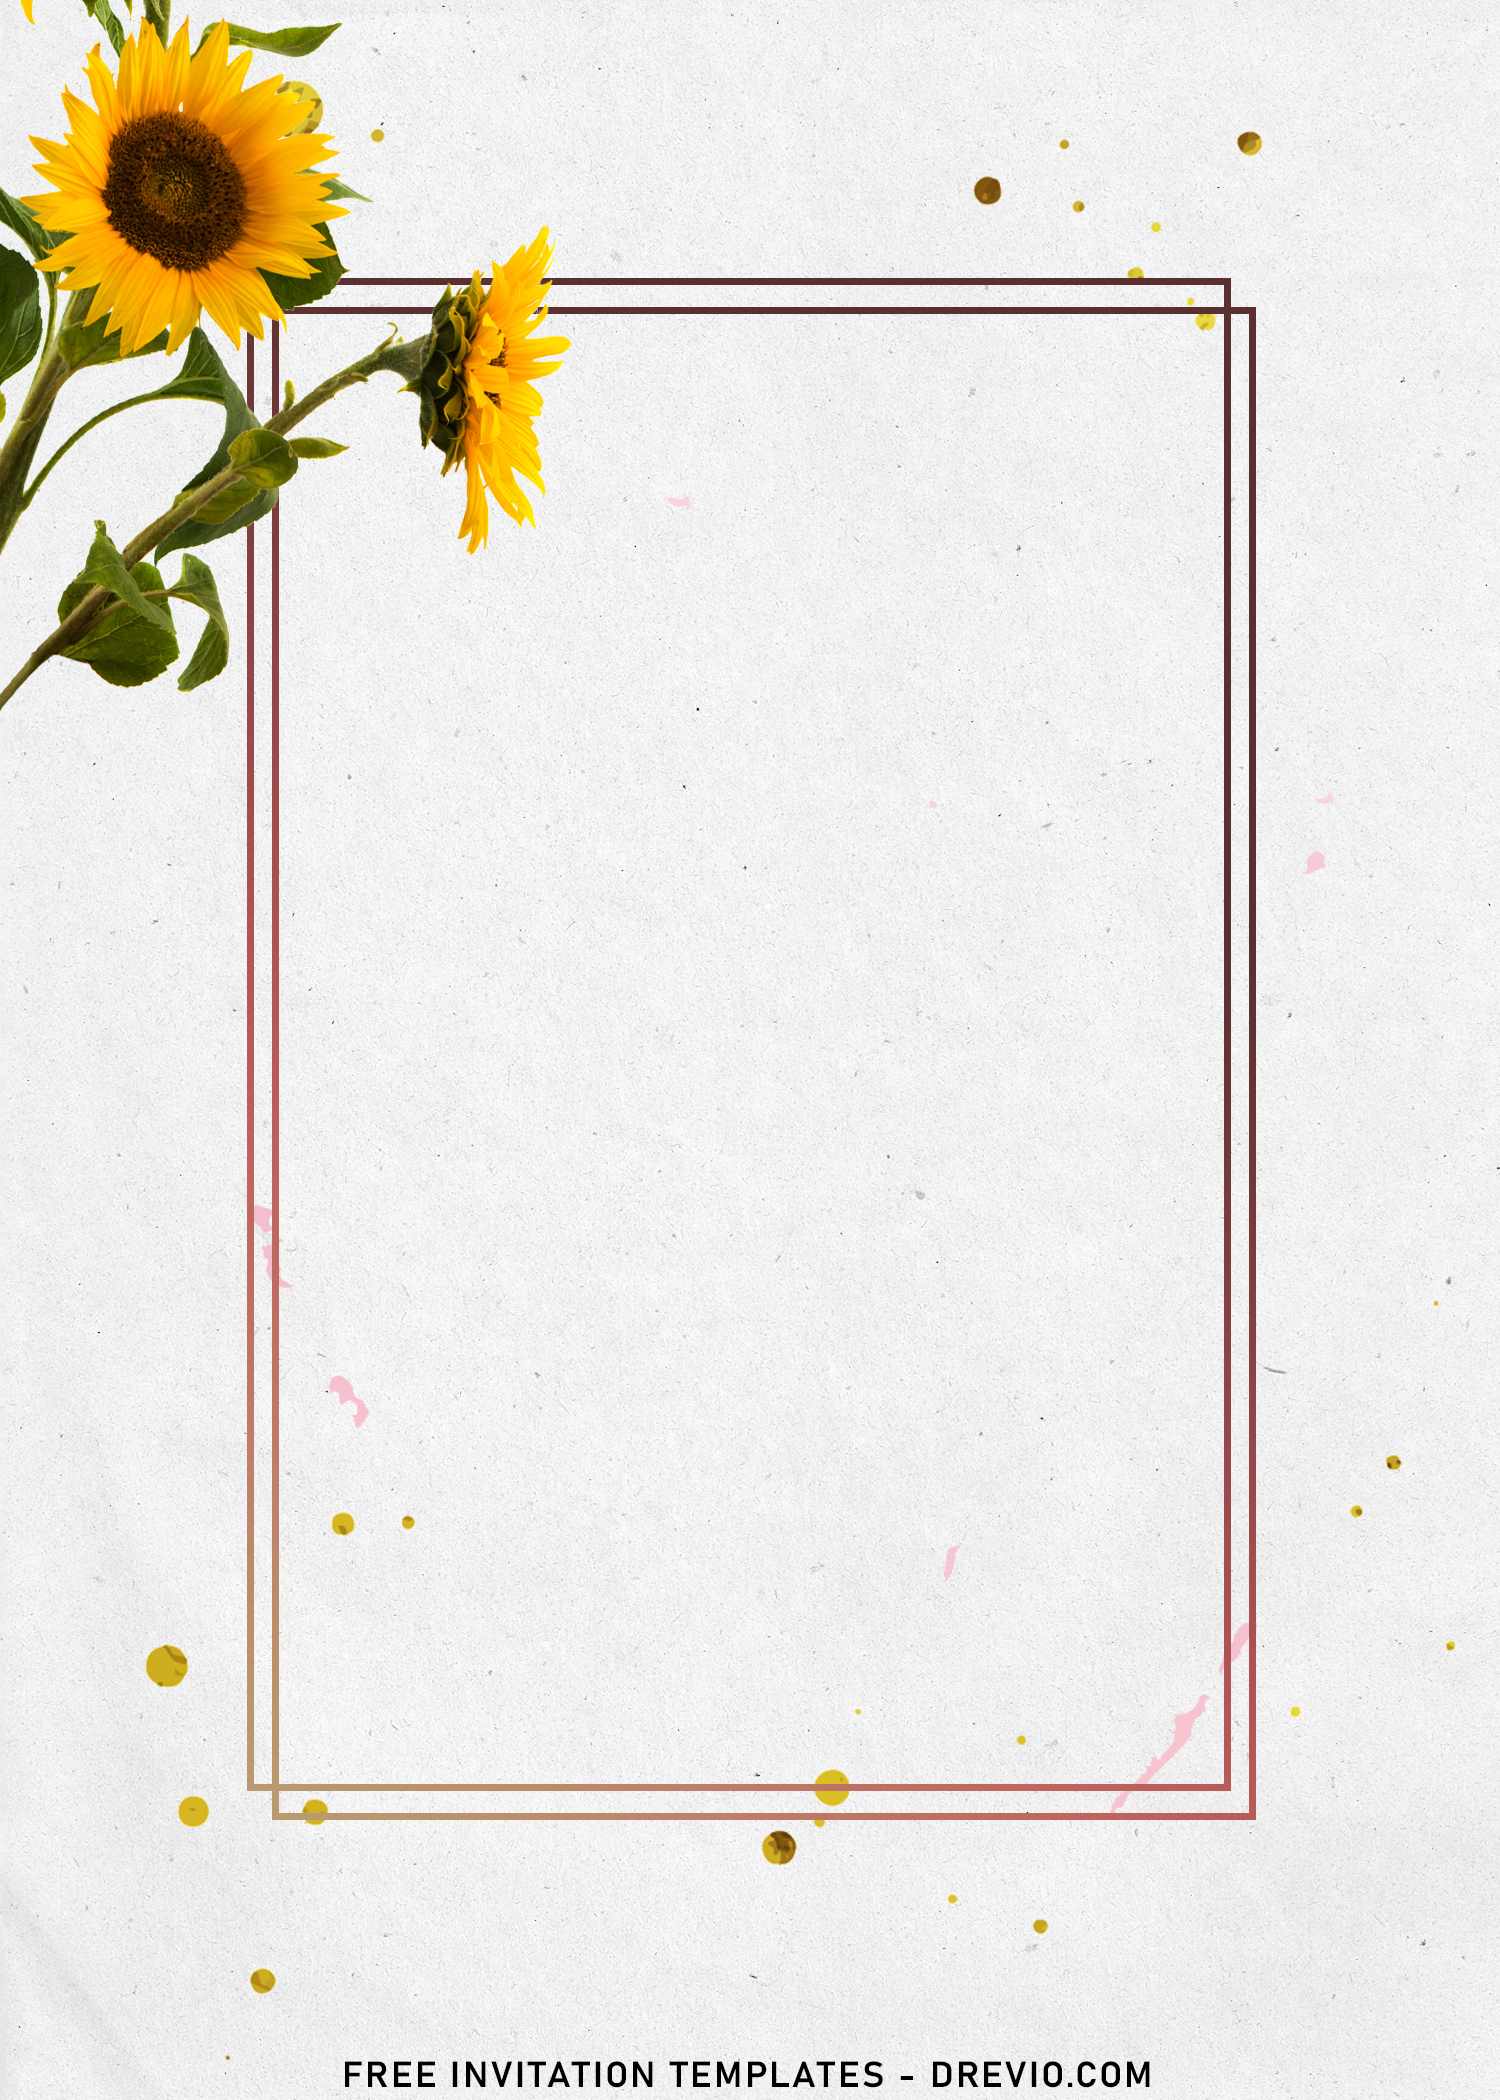 7+ Watercolor Rustic Sunflower Birthday Invitation Templates | Download ...